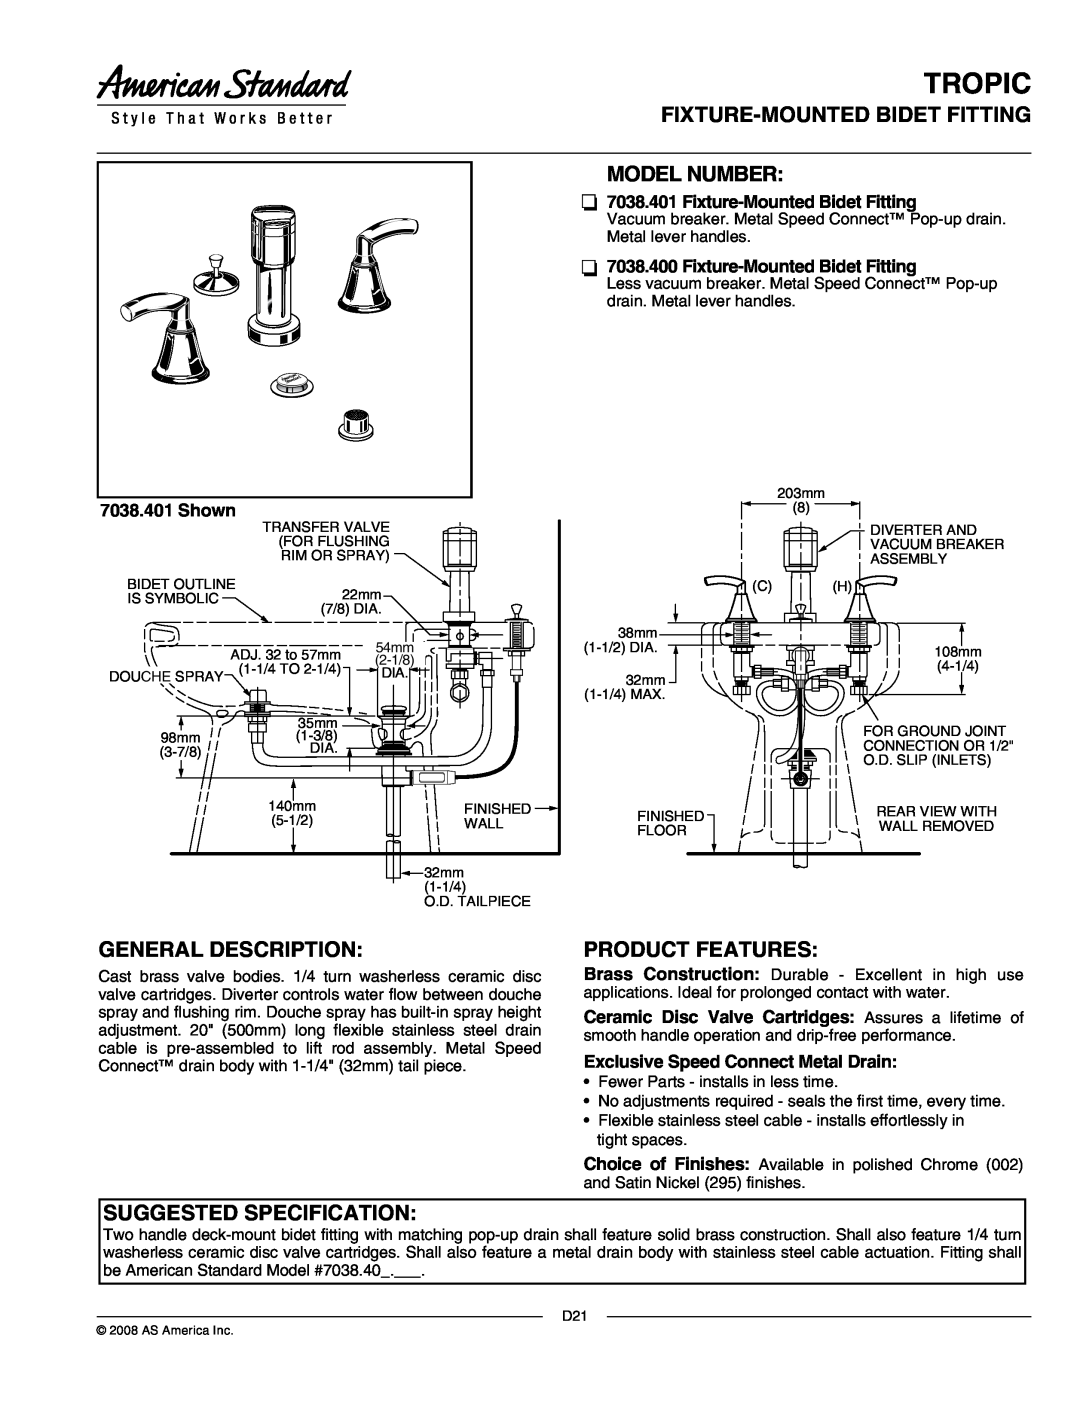 American Standard 7038.401 manual Tropic, Fixture-Mountedbidet Fitting Model Number, General Description, Product Features 